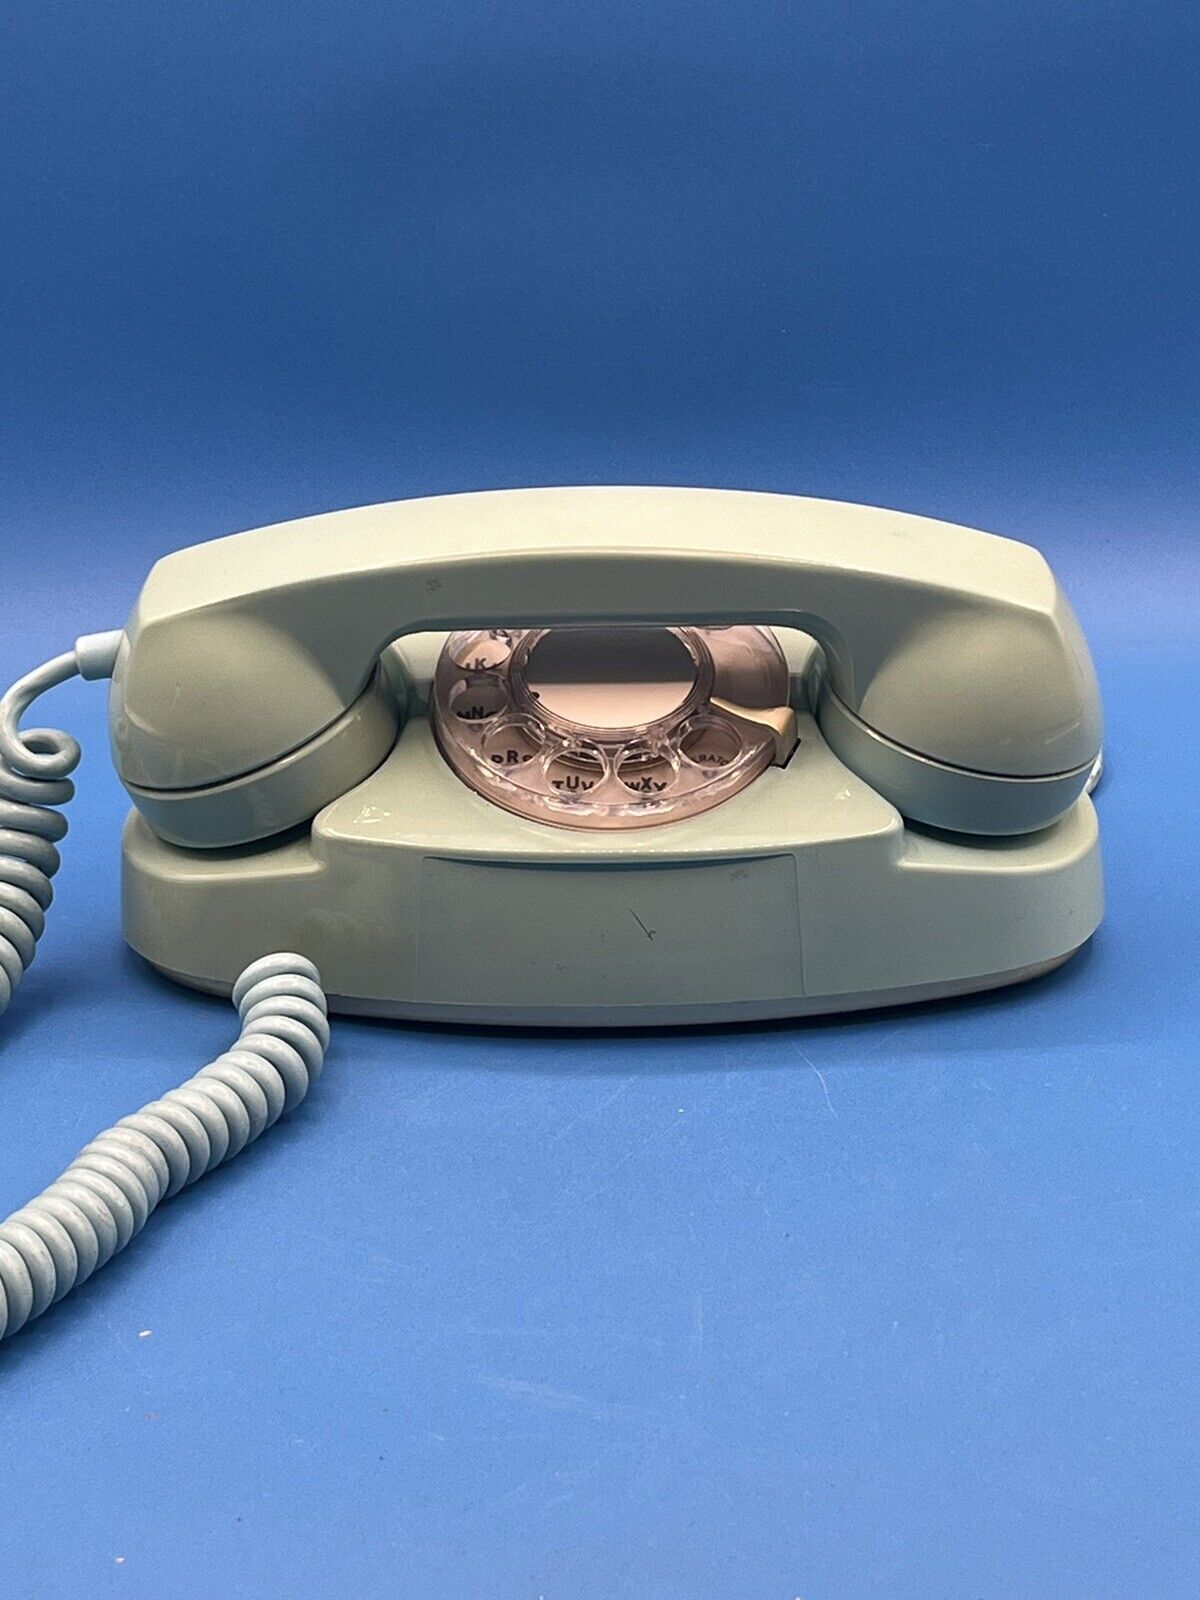 ITT Kellogg Rotary Telephone Bell System Princess Aqua Teal Blue Vintage